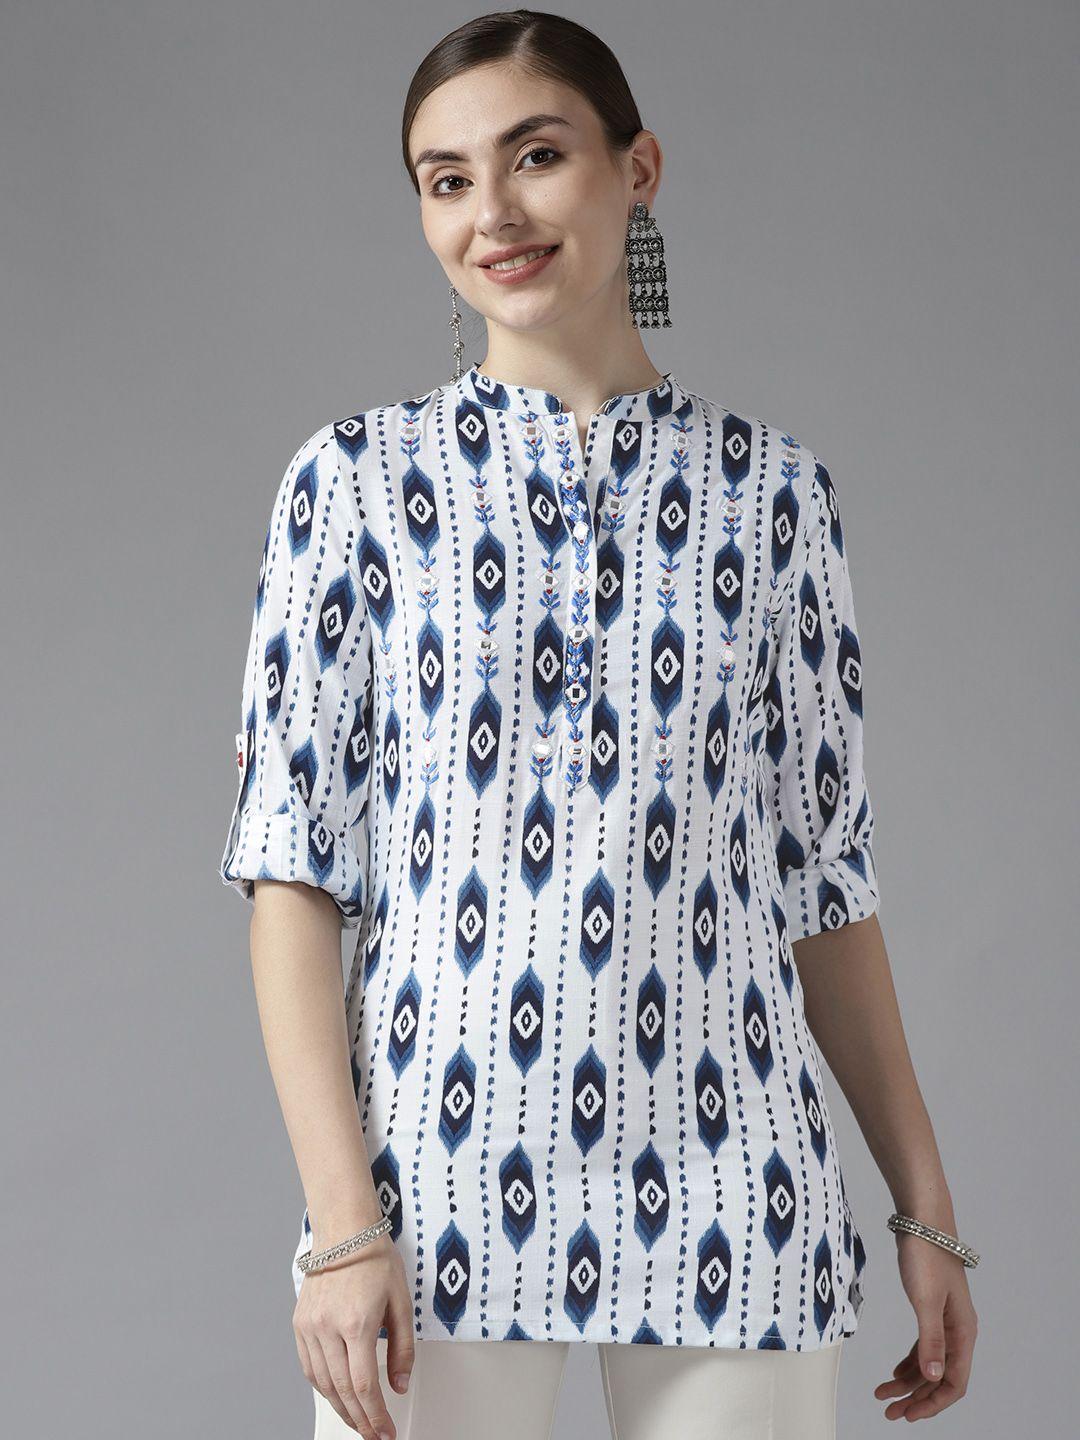 amirah s white & navy blue print mandarin collar roll-up sleeves shirt style top